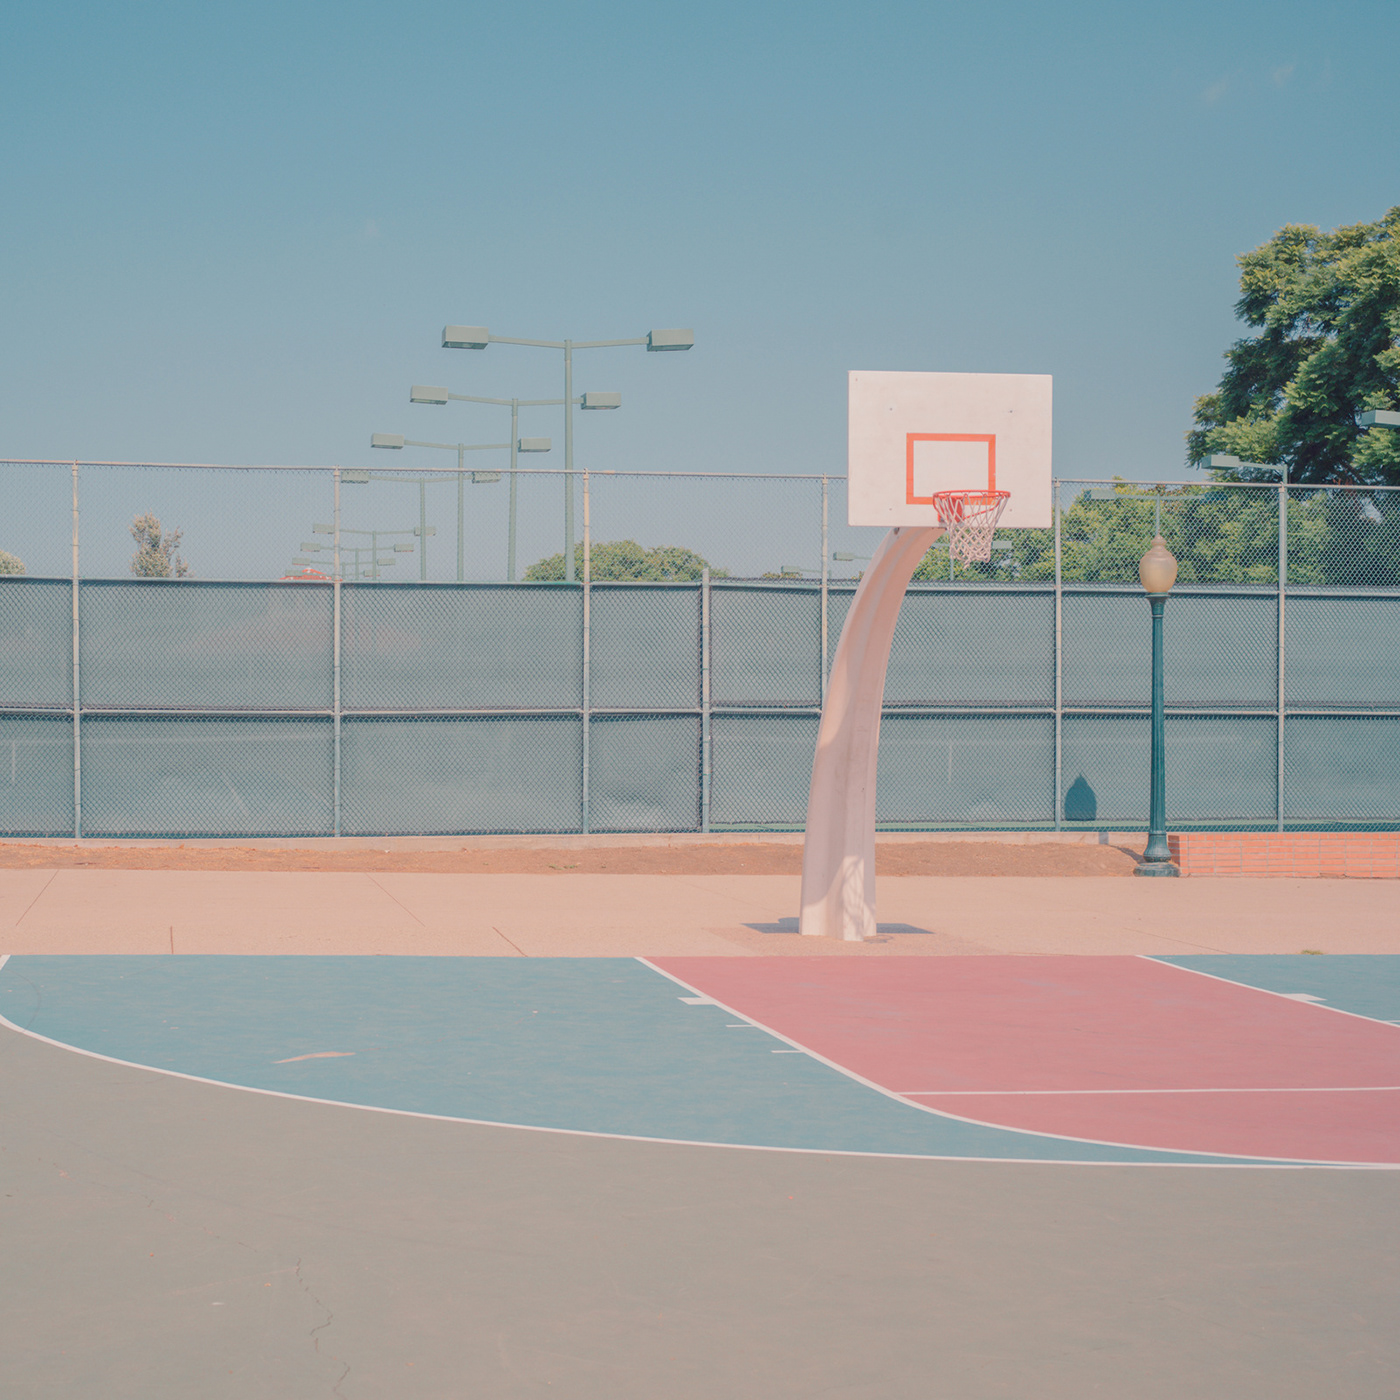 architecture Basketballcourt colors design people Playground sport tenniscourt visualart